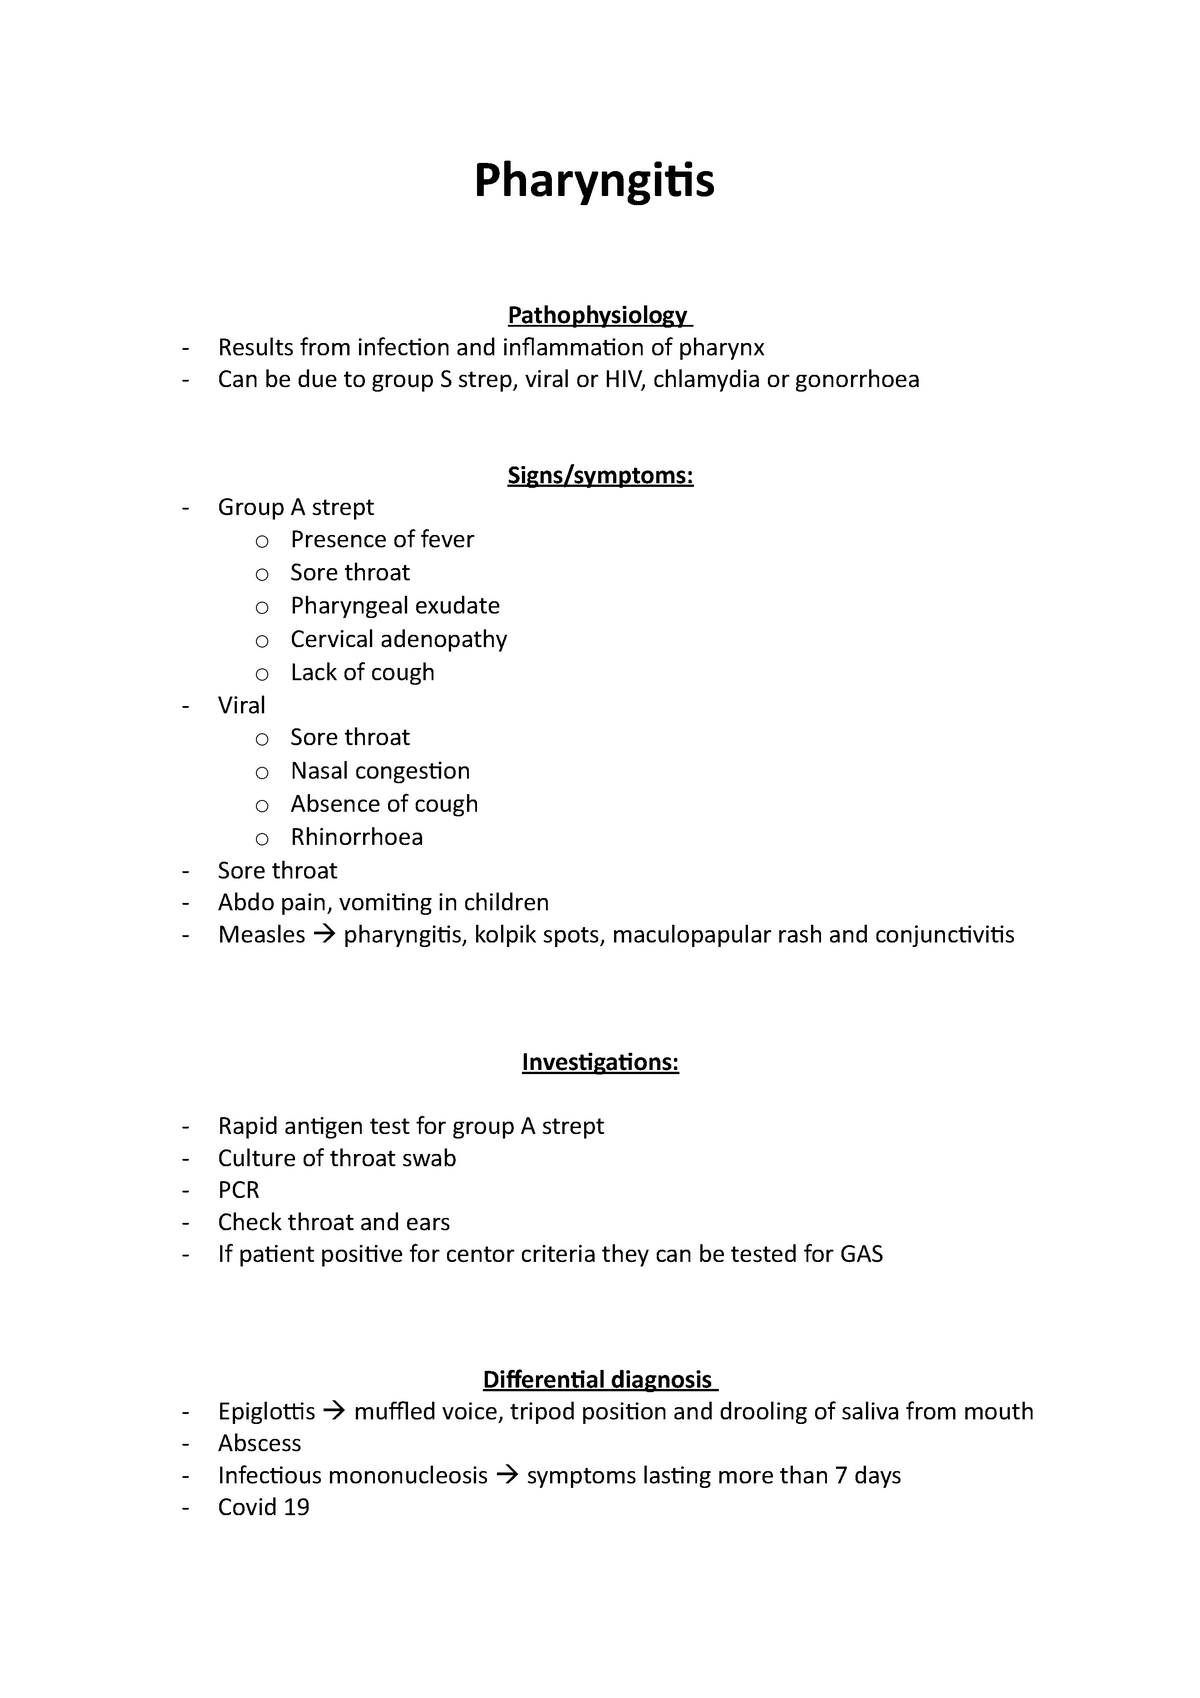 Pharyngitis notes Pharyngitis Pathophysiology Results from infection